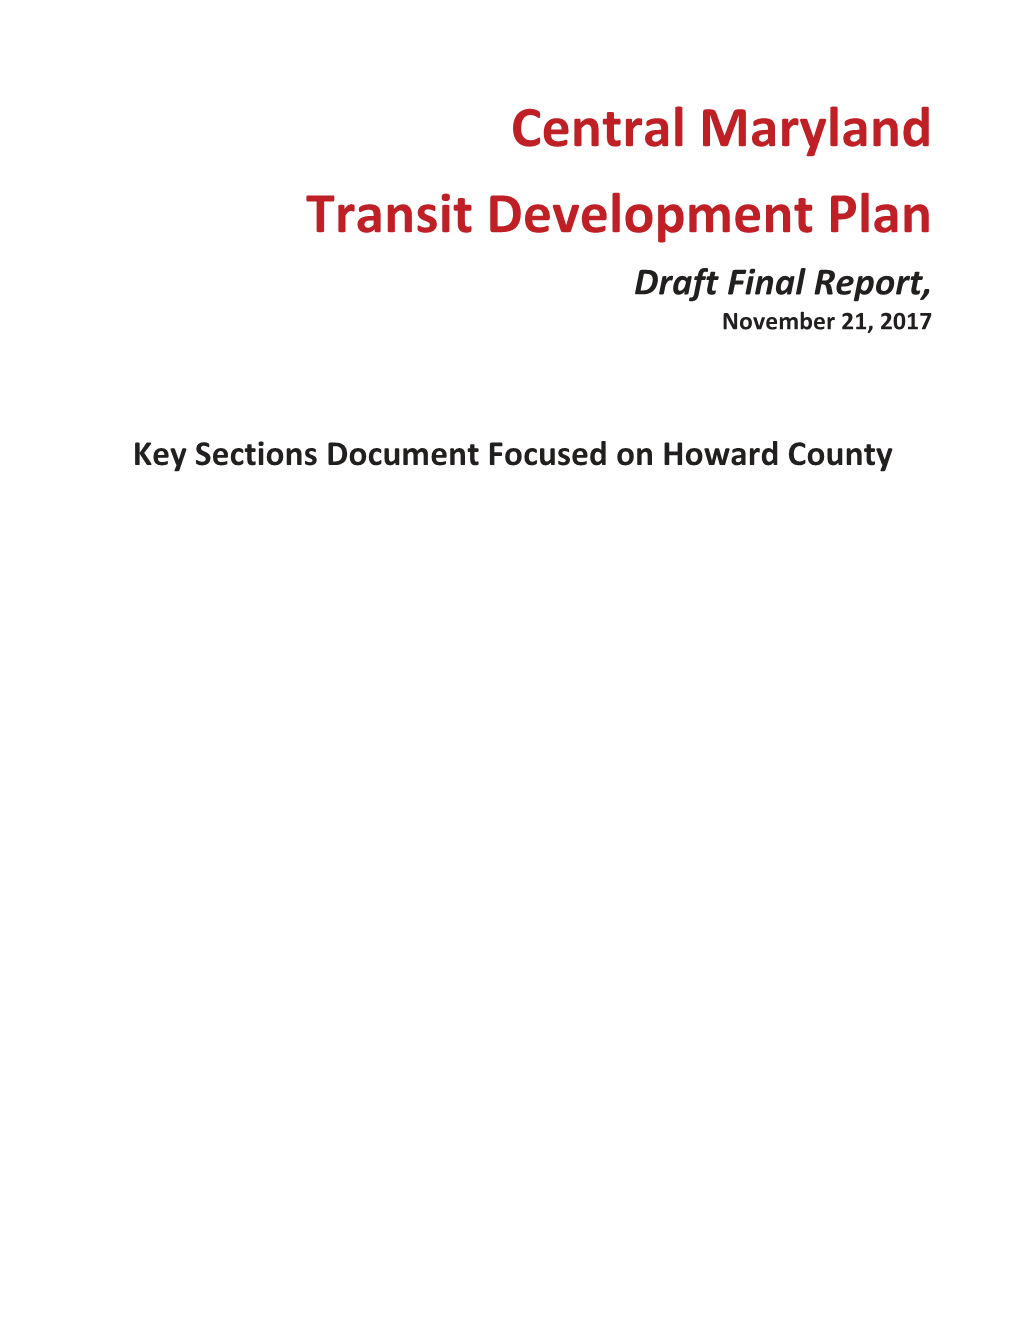 Central Maryland Transit Development Plan Draft Final Report, November 21, 2017